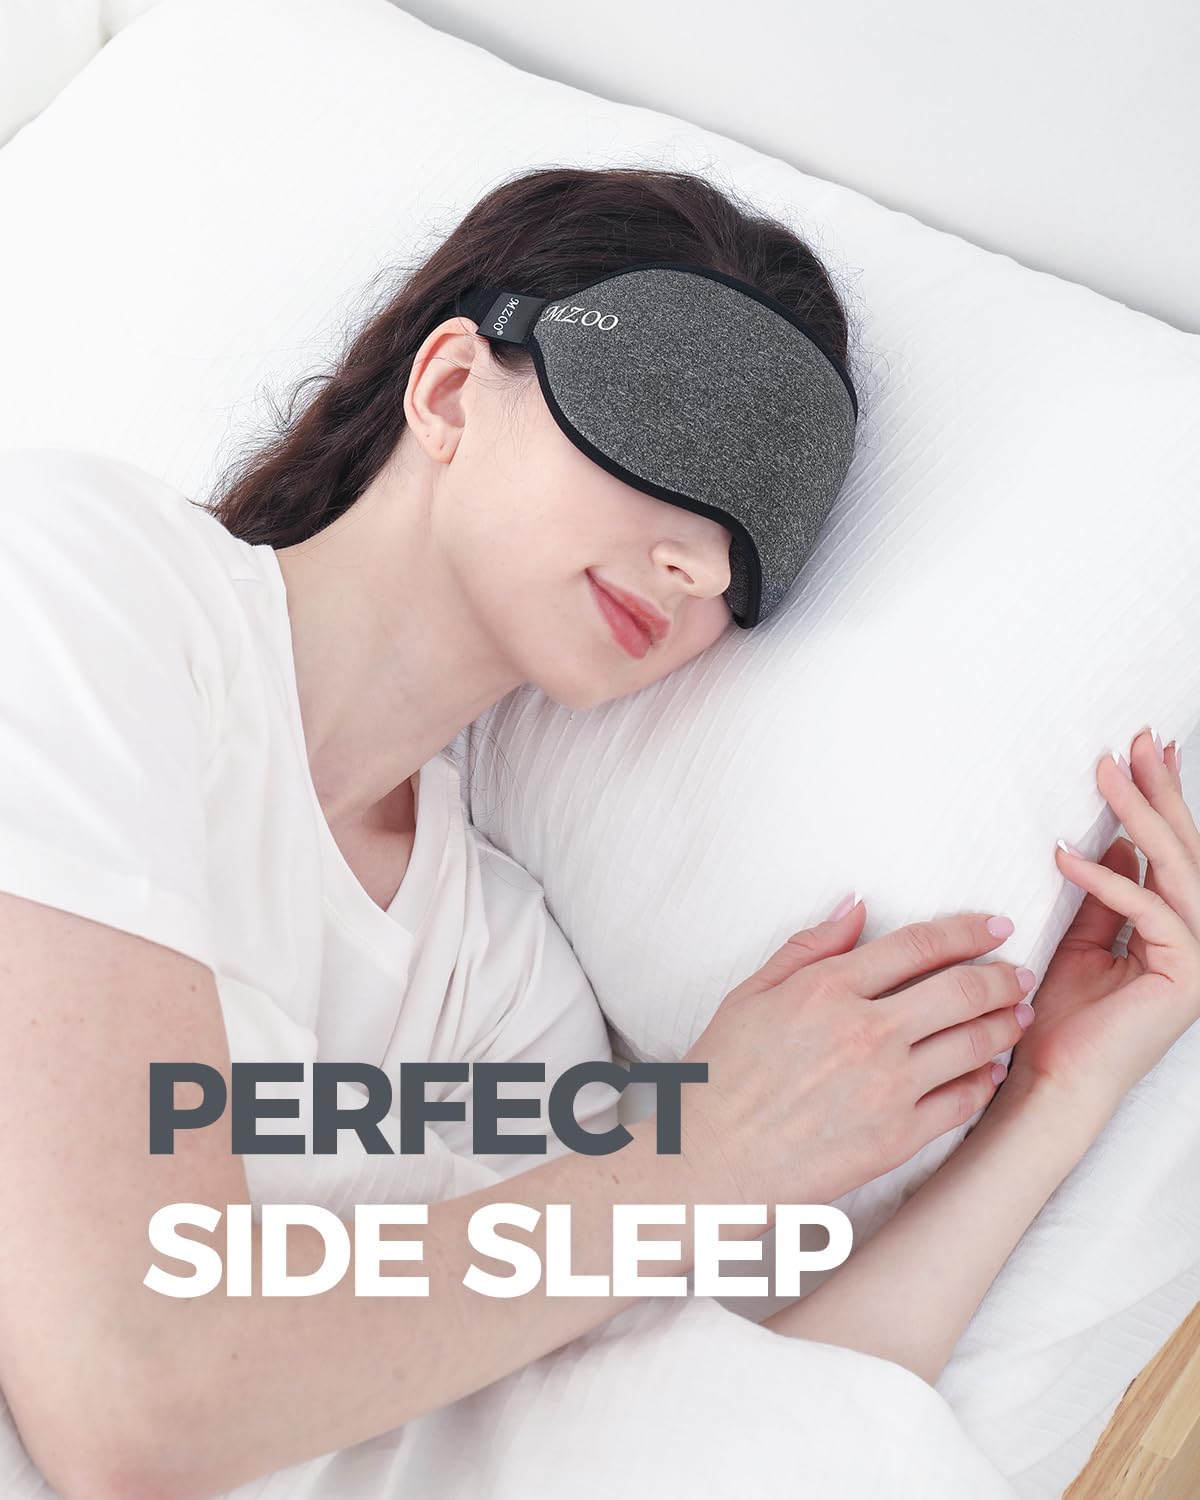 MZOO Luxury Sleep Mask for Back and Side Sleeper, 100% Block Out Light Sleeping Eye Mask for Women Men, Zero Eye Pressure 3D Contoured Night Blindfold, Breathable  Soft Eye Shade Cover